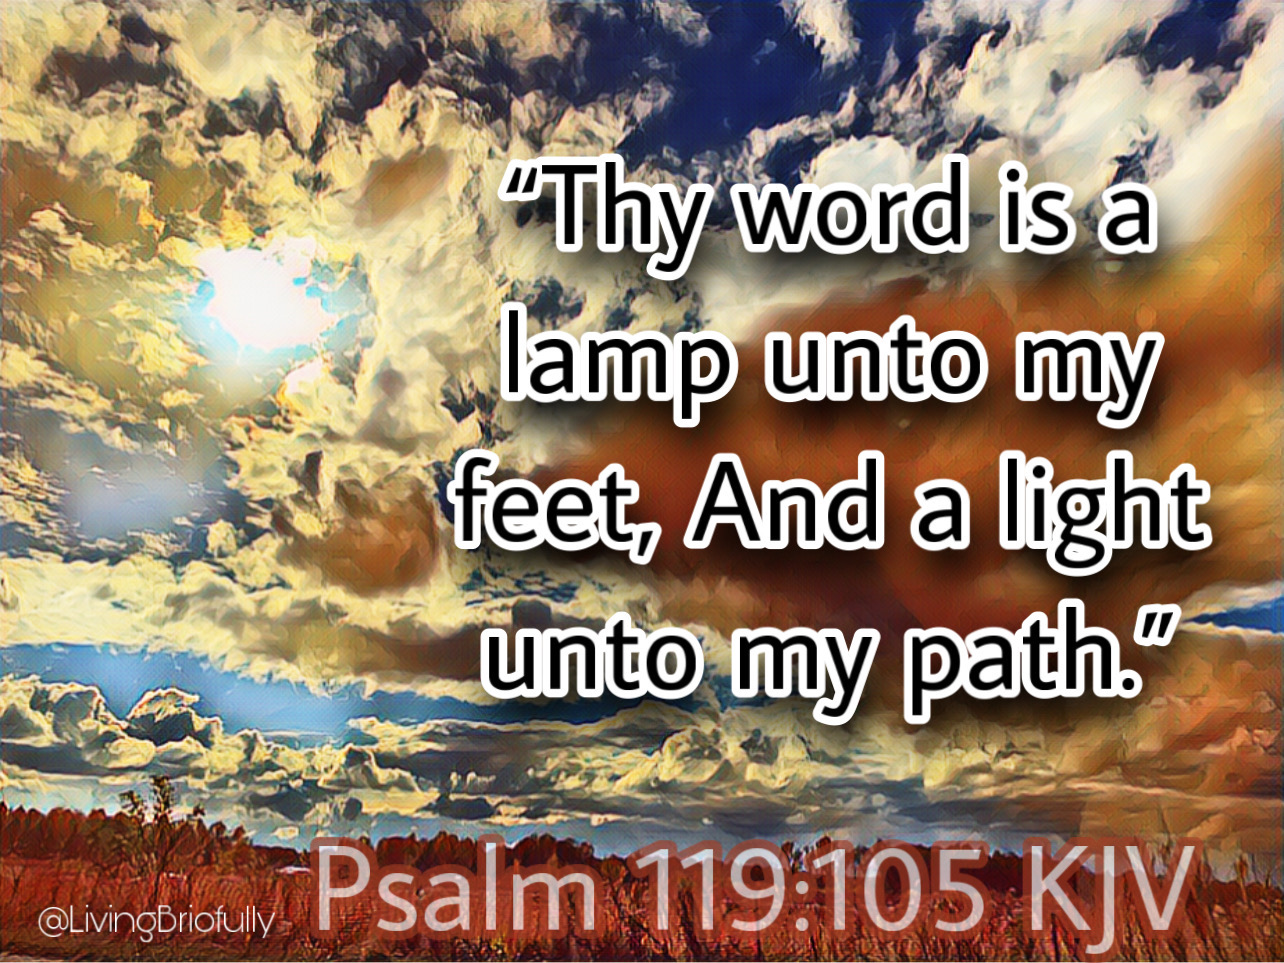 "Thy word is a lamp unto my feet, And a light unto my path." Psalm 119:105 KJV